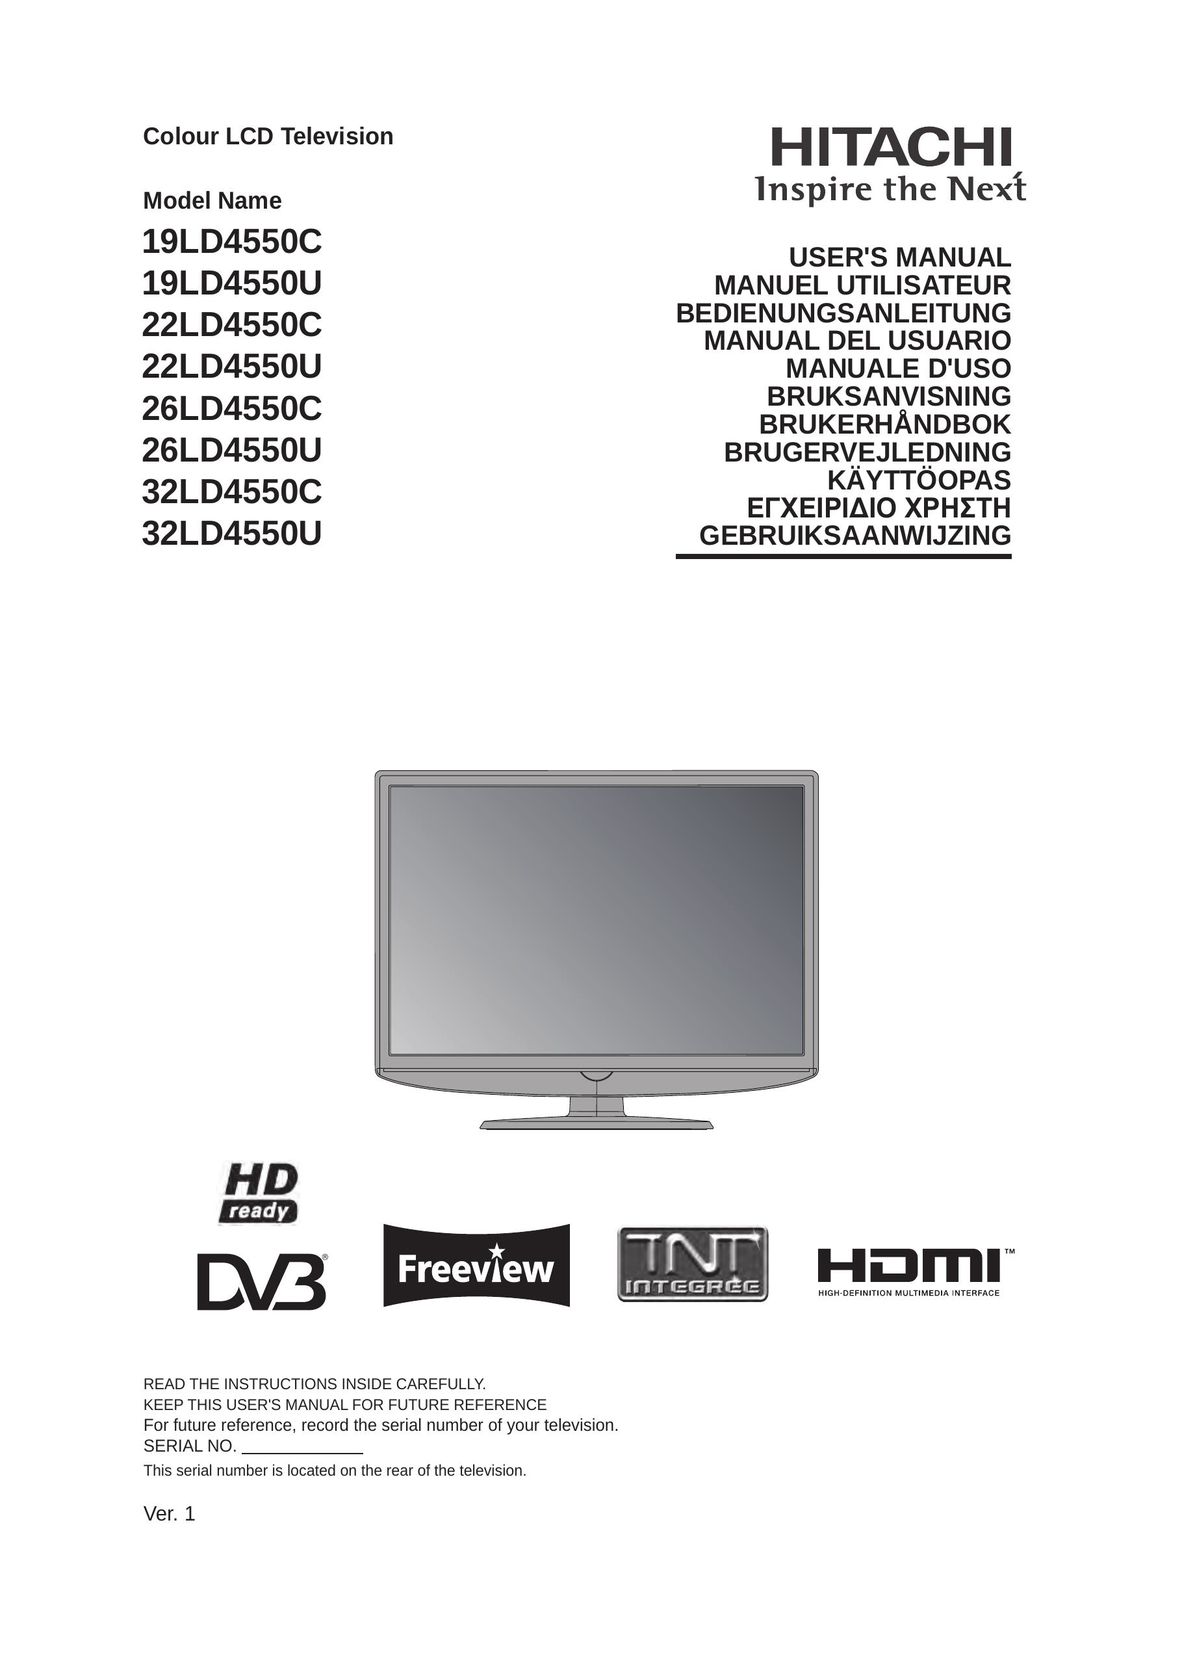 Hitachi 19LD4550U Flat Panel Television User Manual